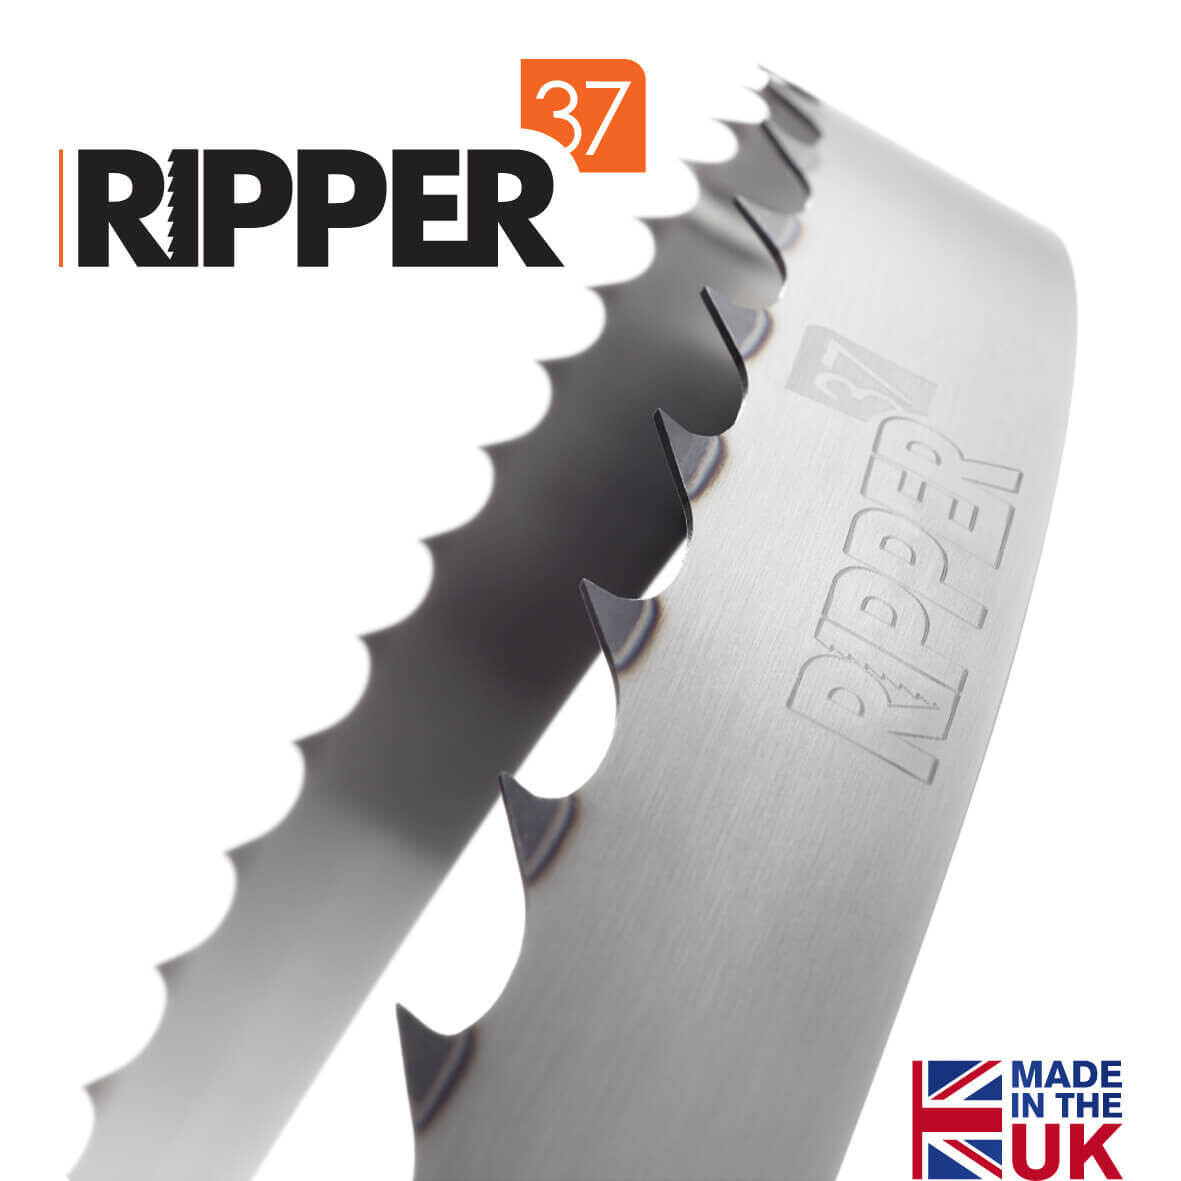 TimberKing 1600 Ripper37 Blades